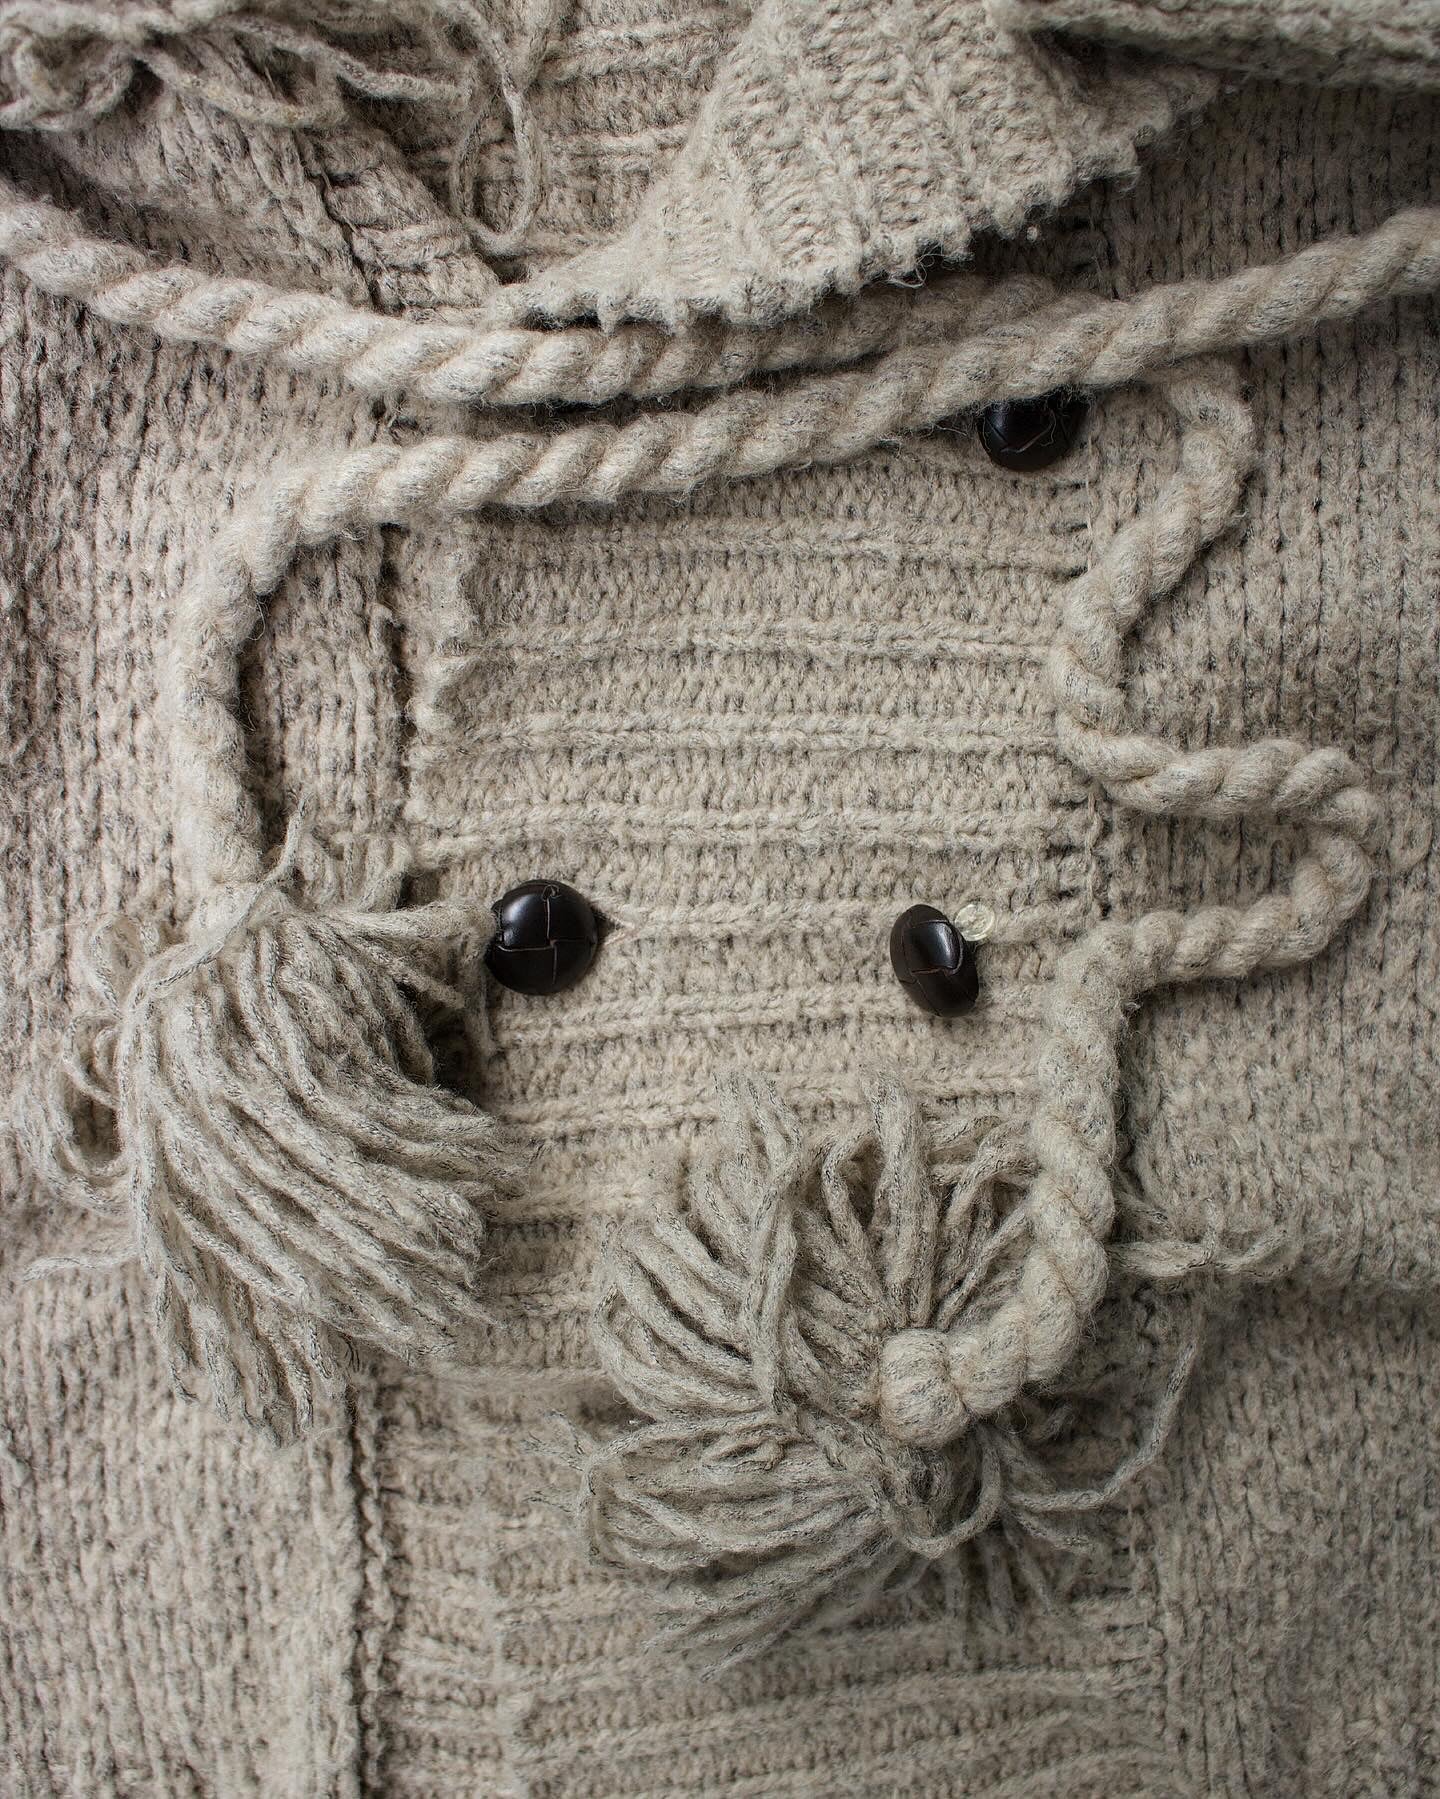 Mihara Yasuhiro AW06 Distressed Cable Wool Knit Cardigan